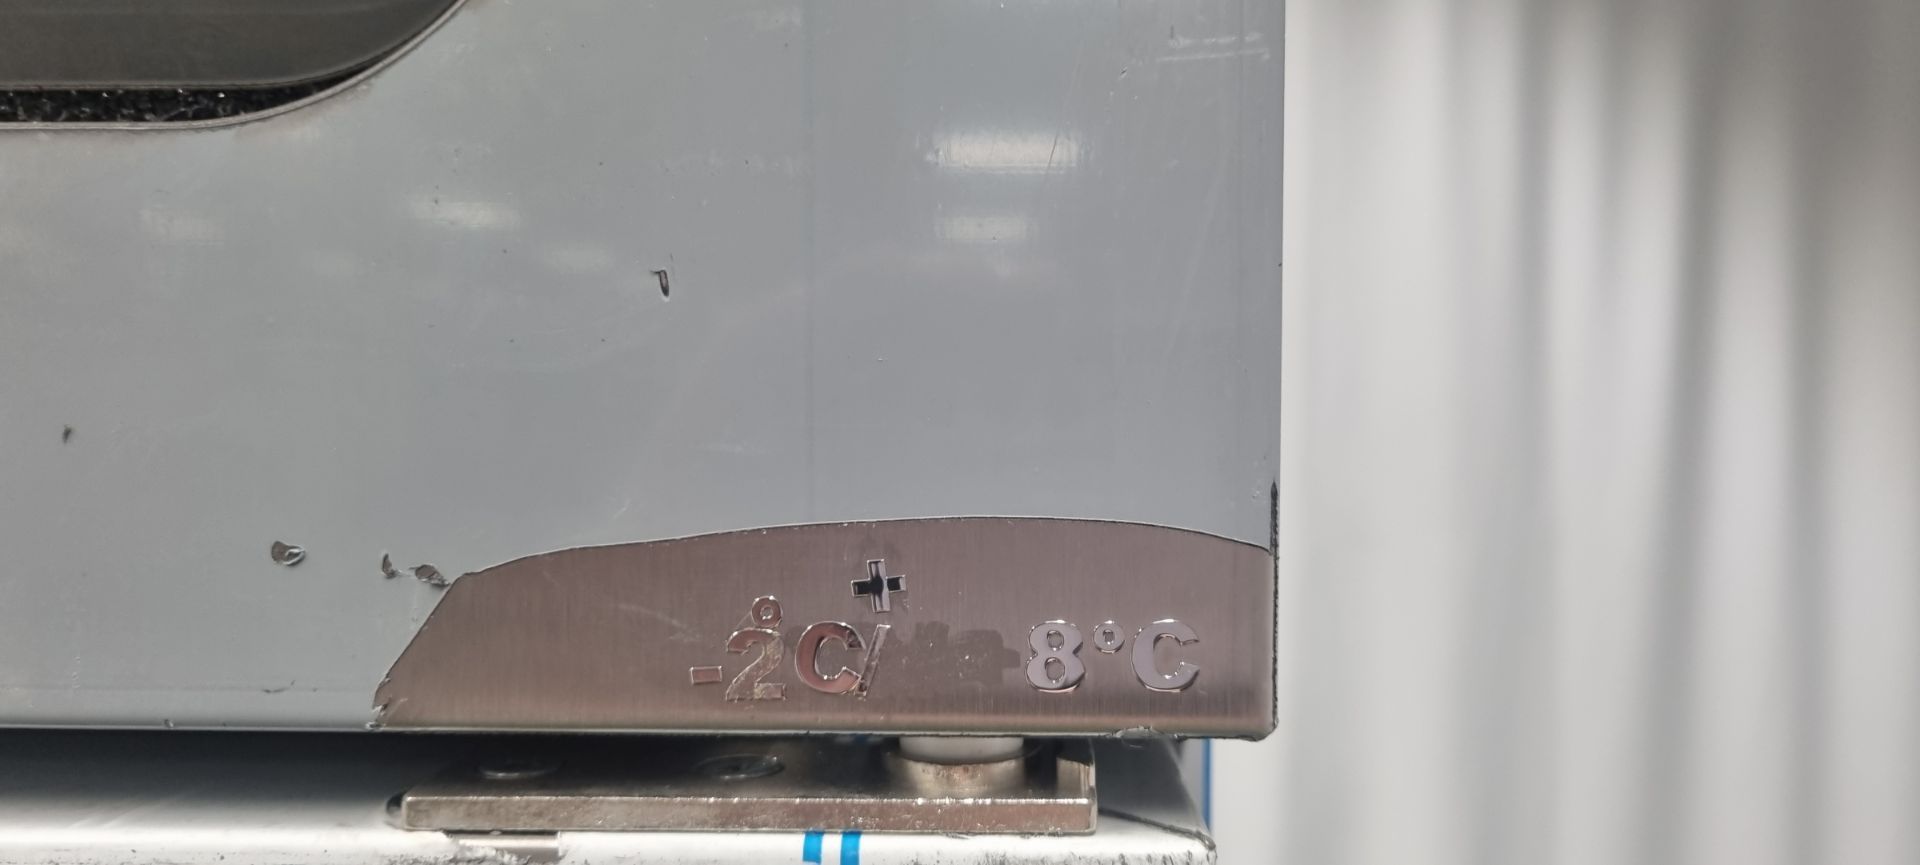 Iceinox VTS 610 CR stainless steel upright, single door refrigerator - Image 5 of 10